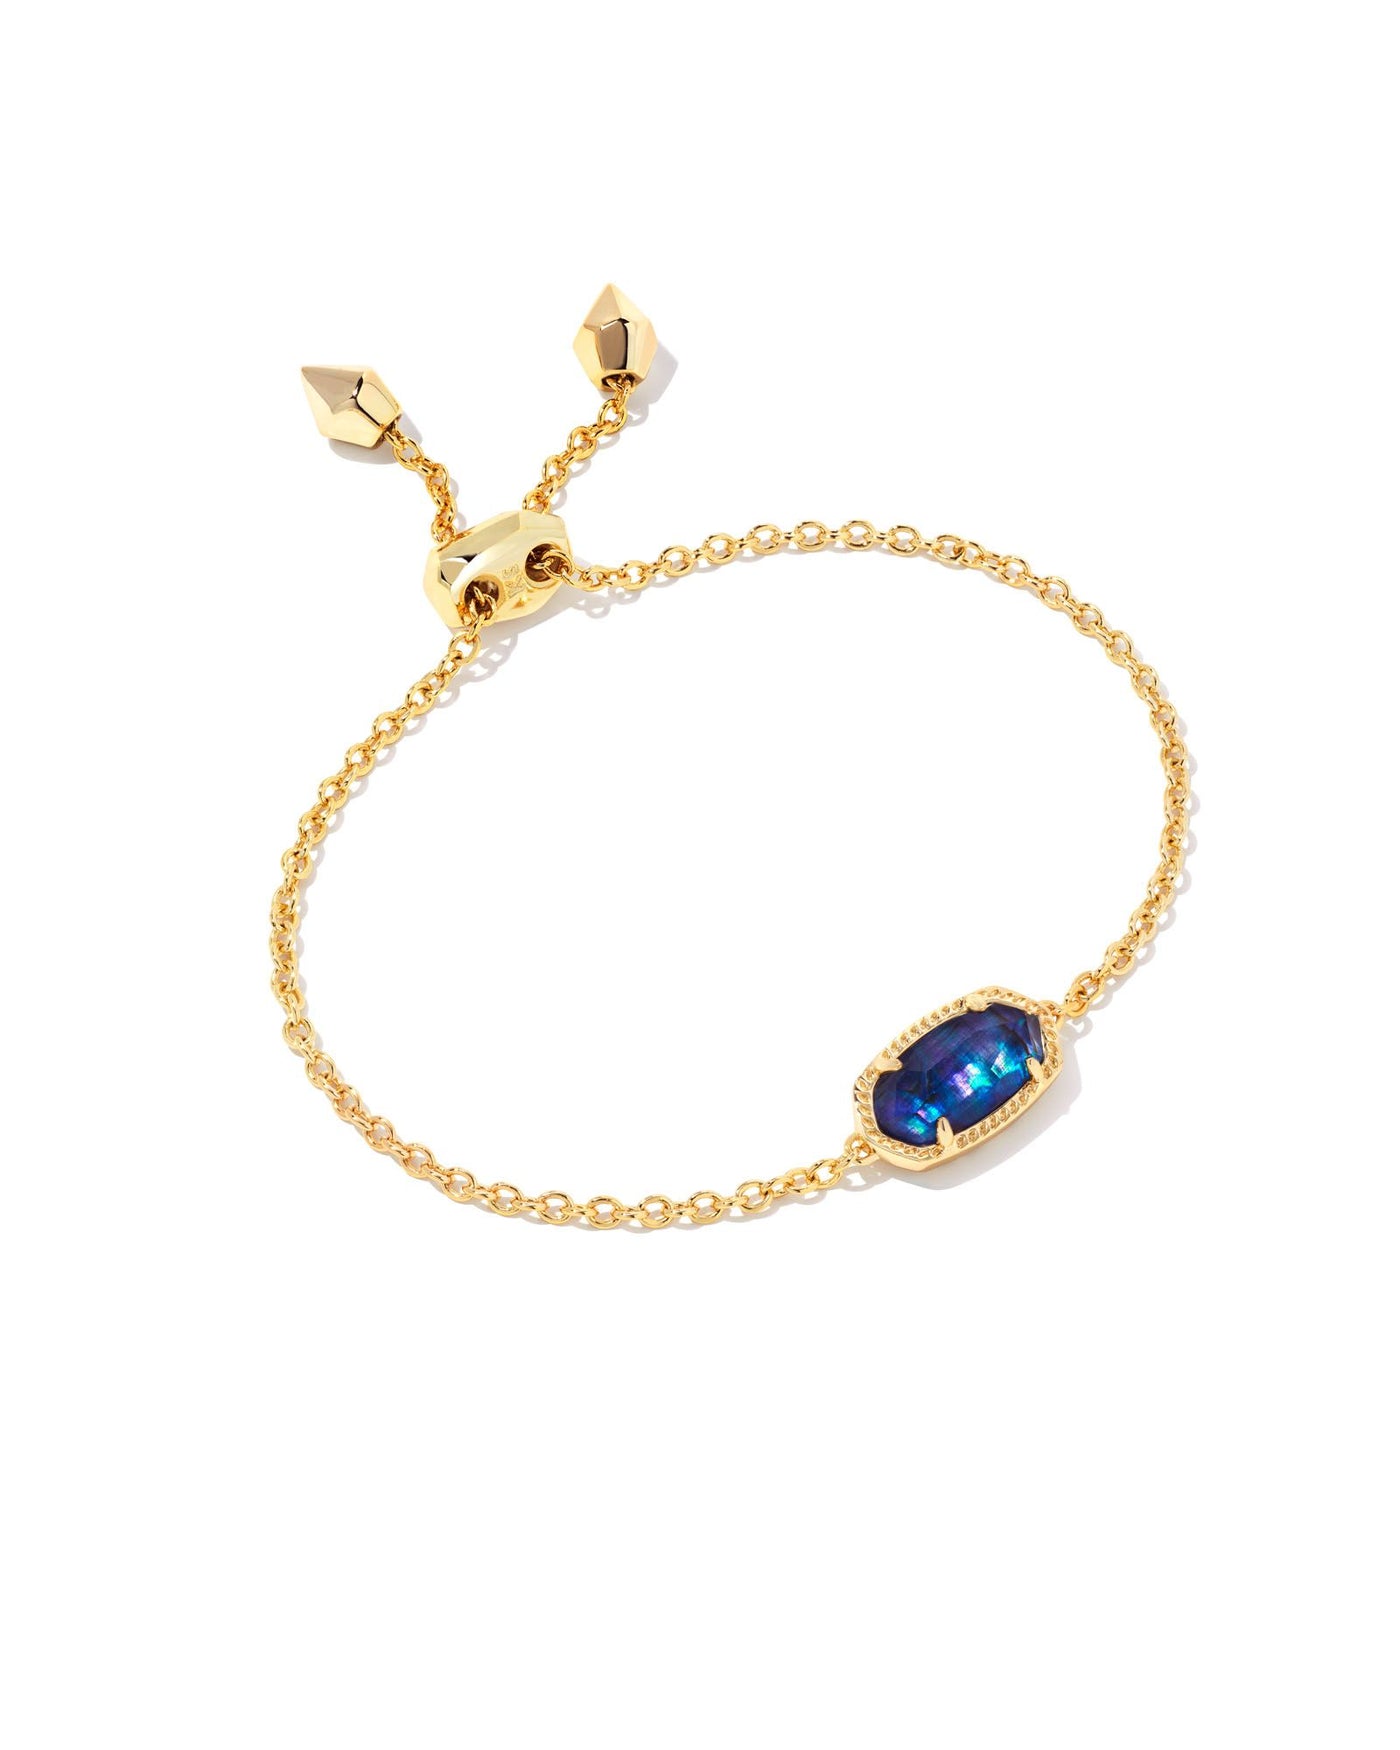 Kendra Scott Elaina Adjustable Chain Bracelet in Gold Navy Abalone on white background.